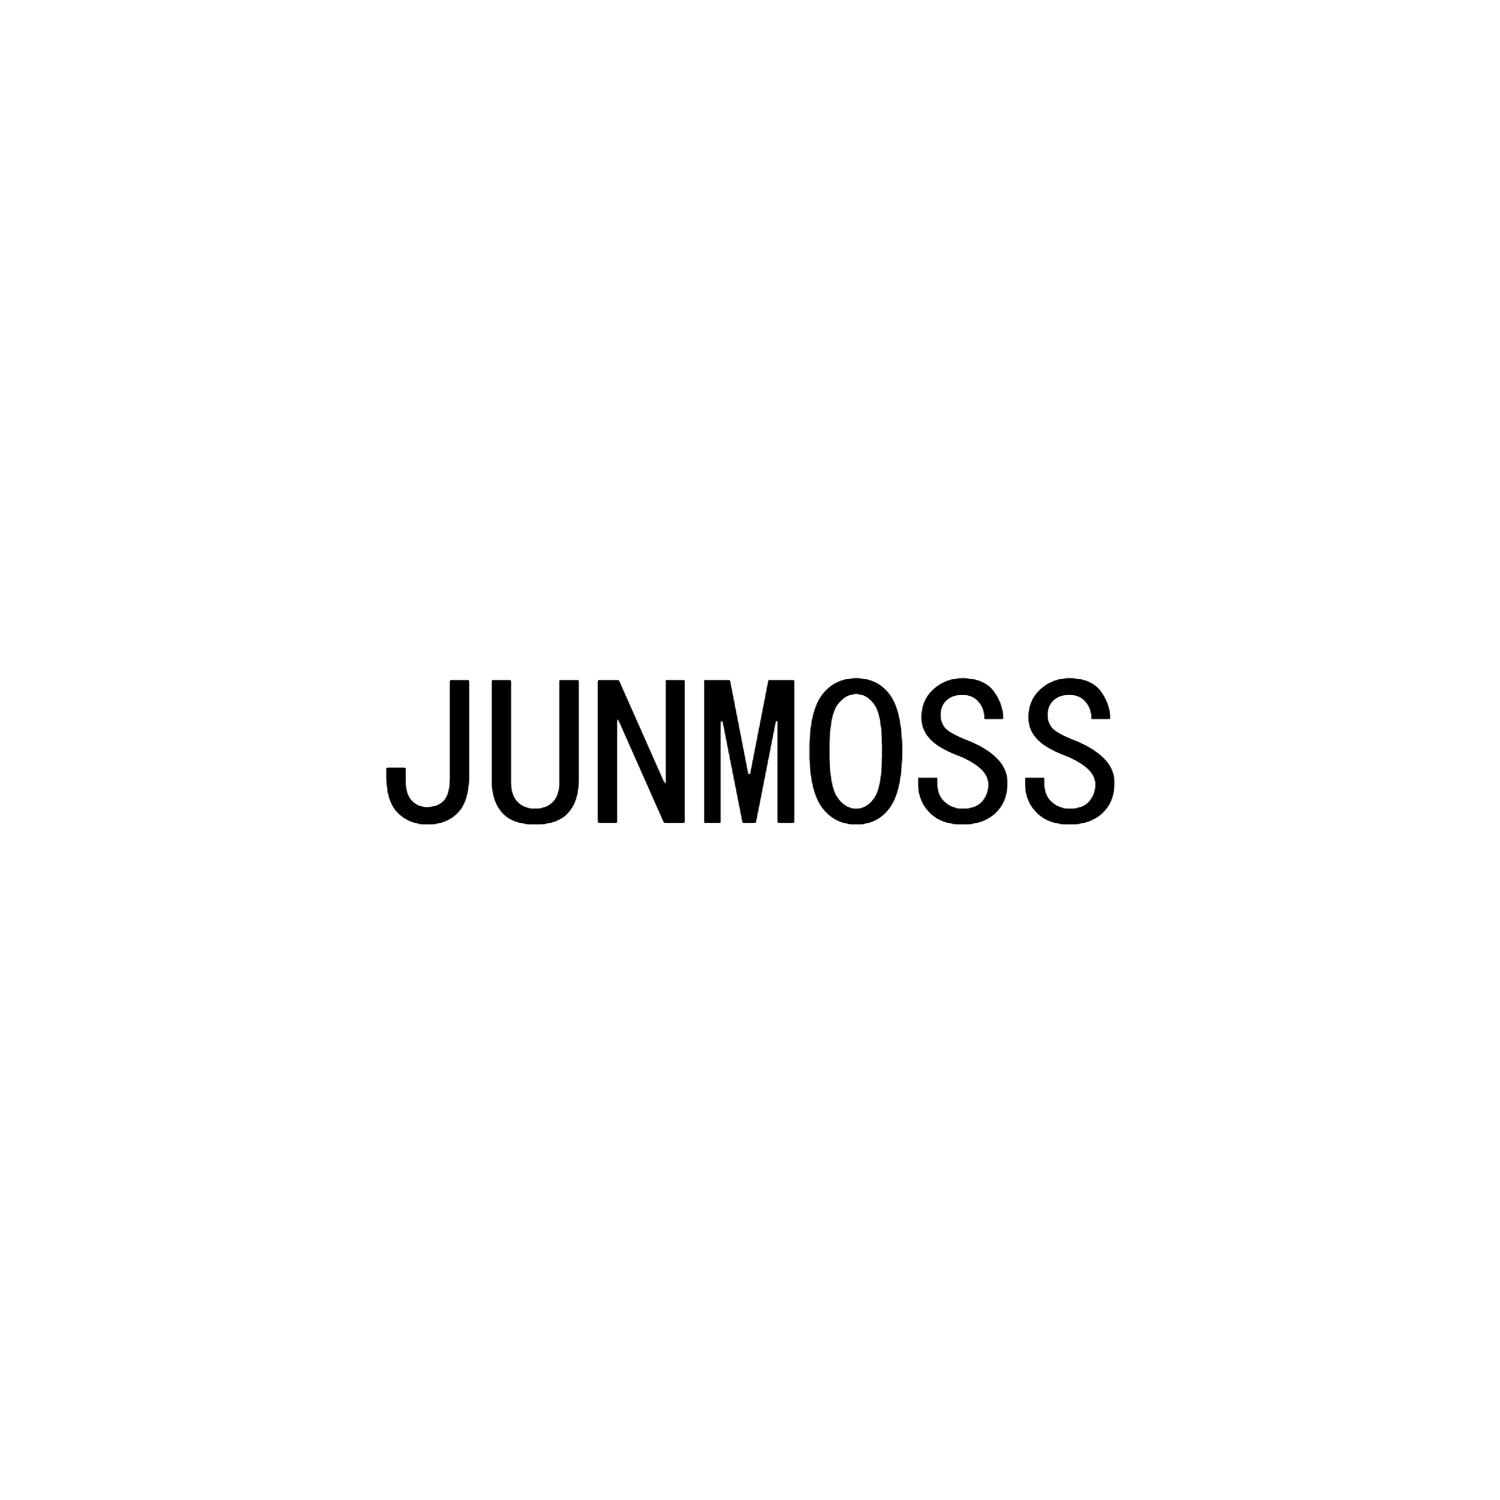 JUNMOSS